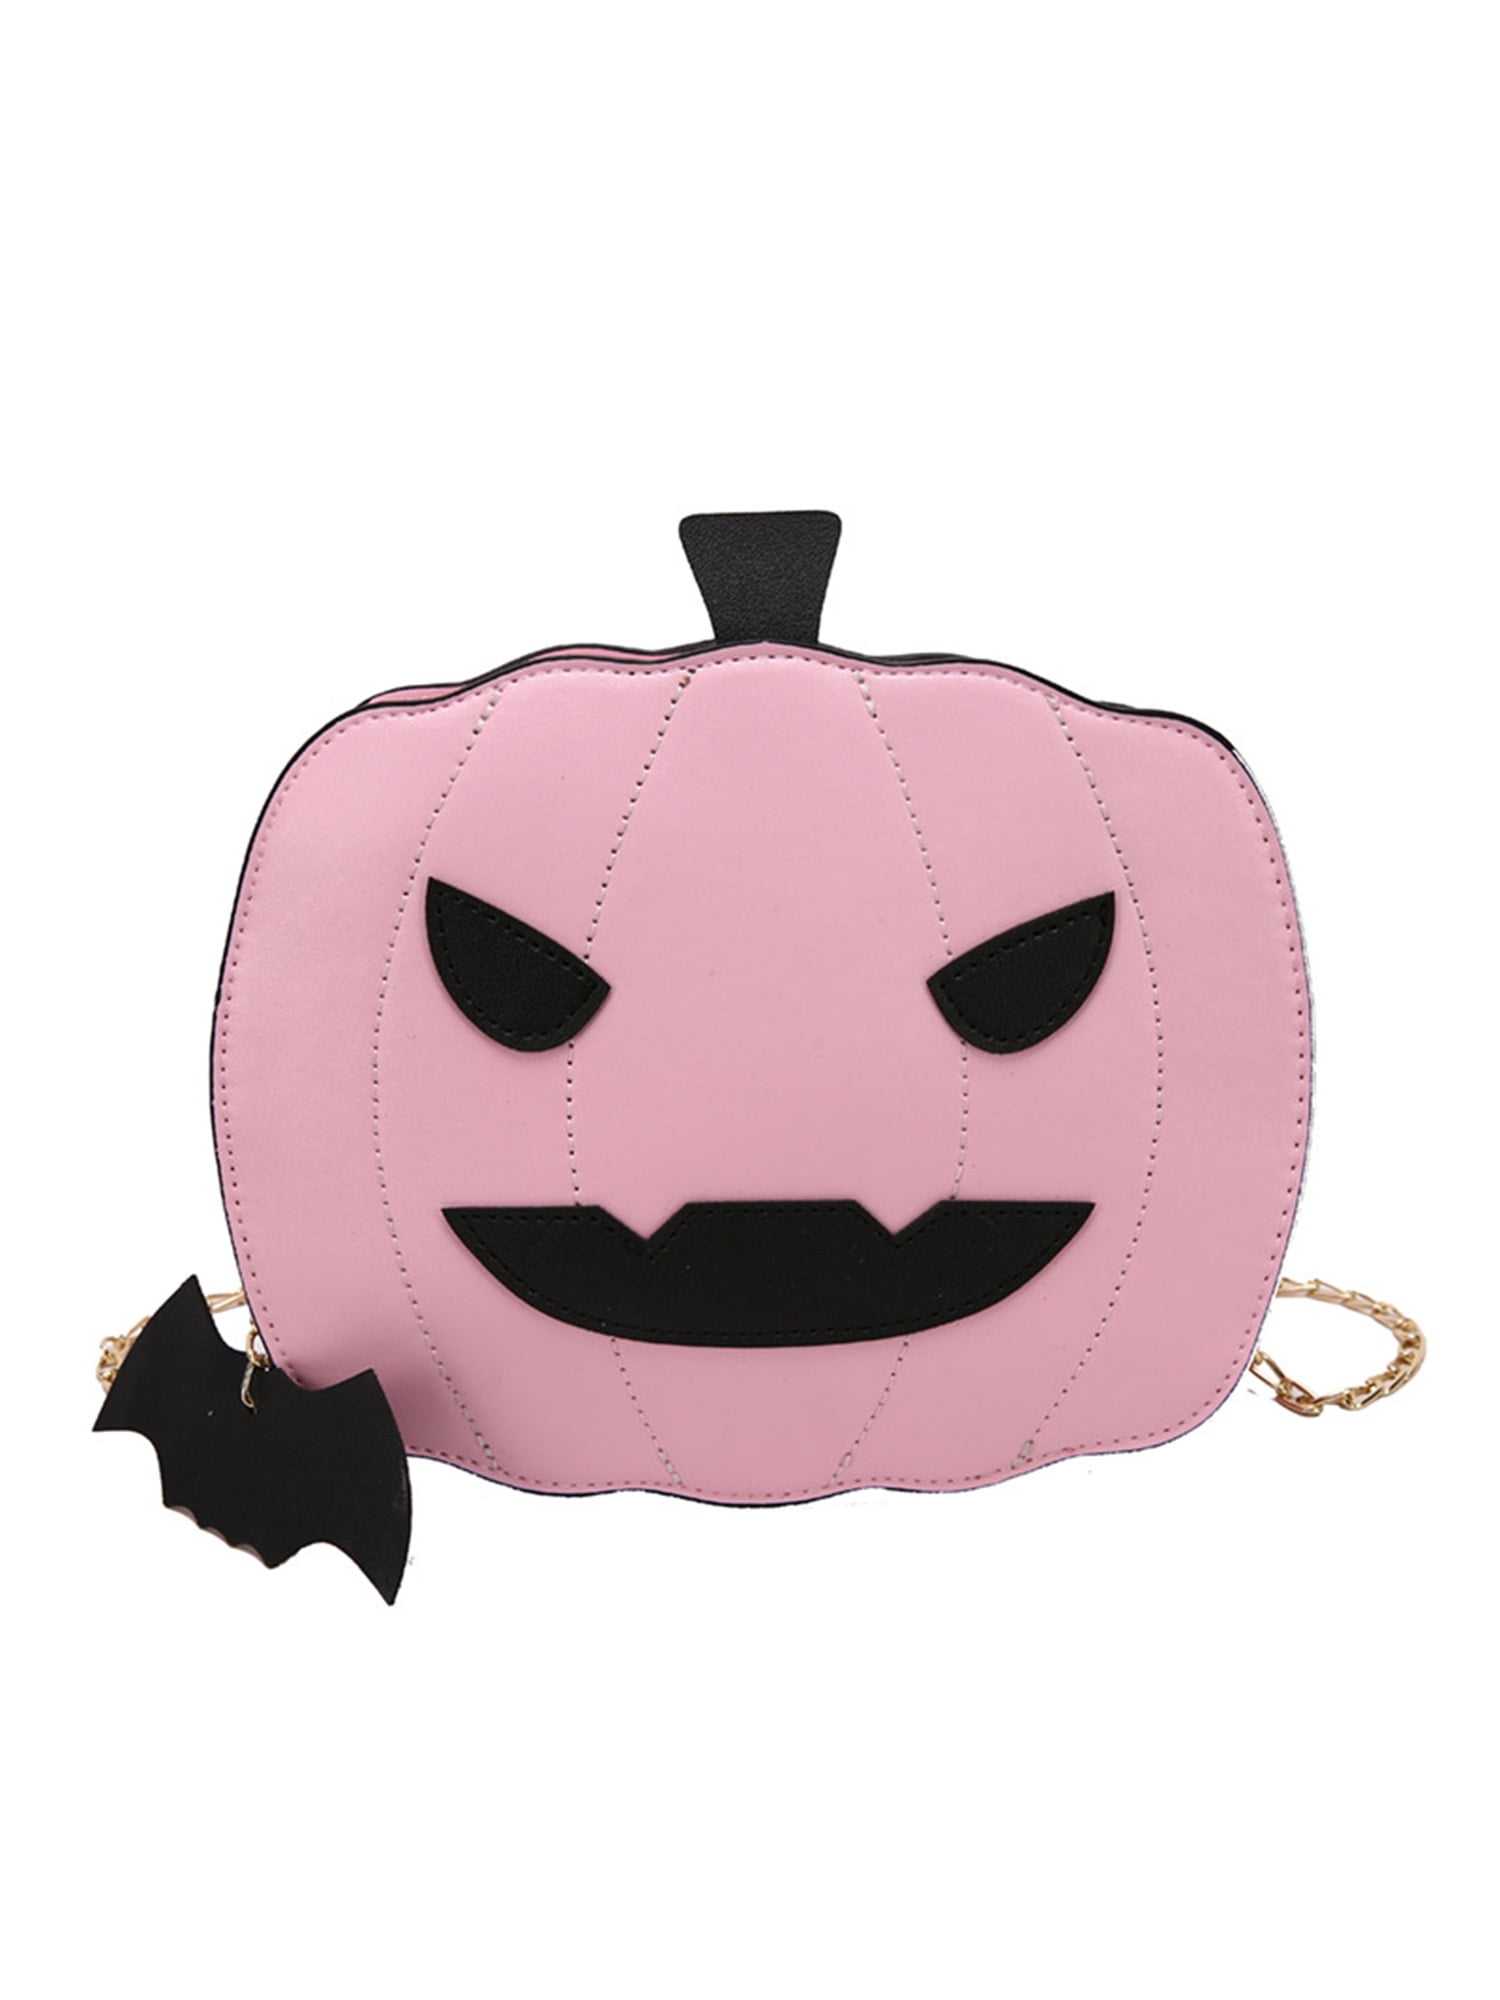 Halloween Pumpkin Women Girl Fashion Handbag PU Leather Shoulder Bag Totes Purse 